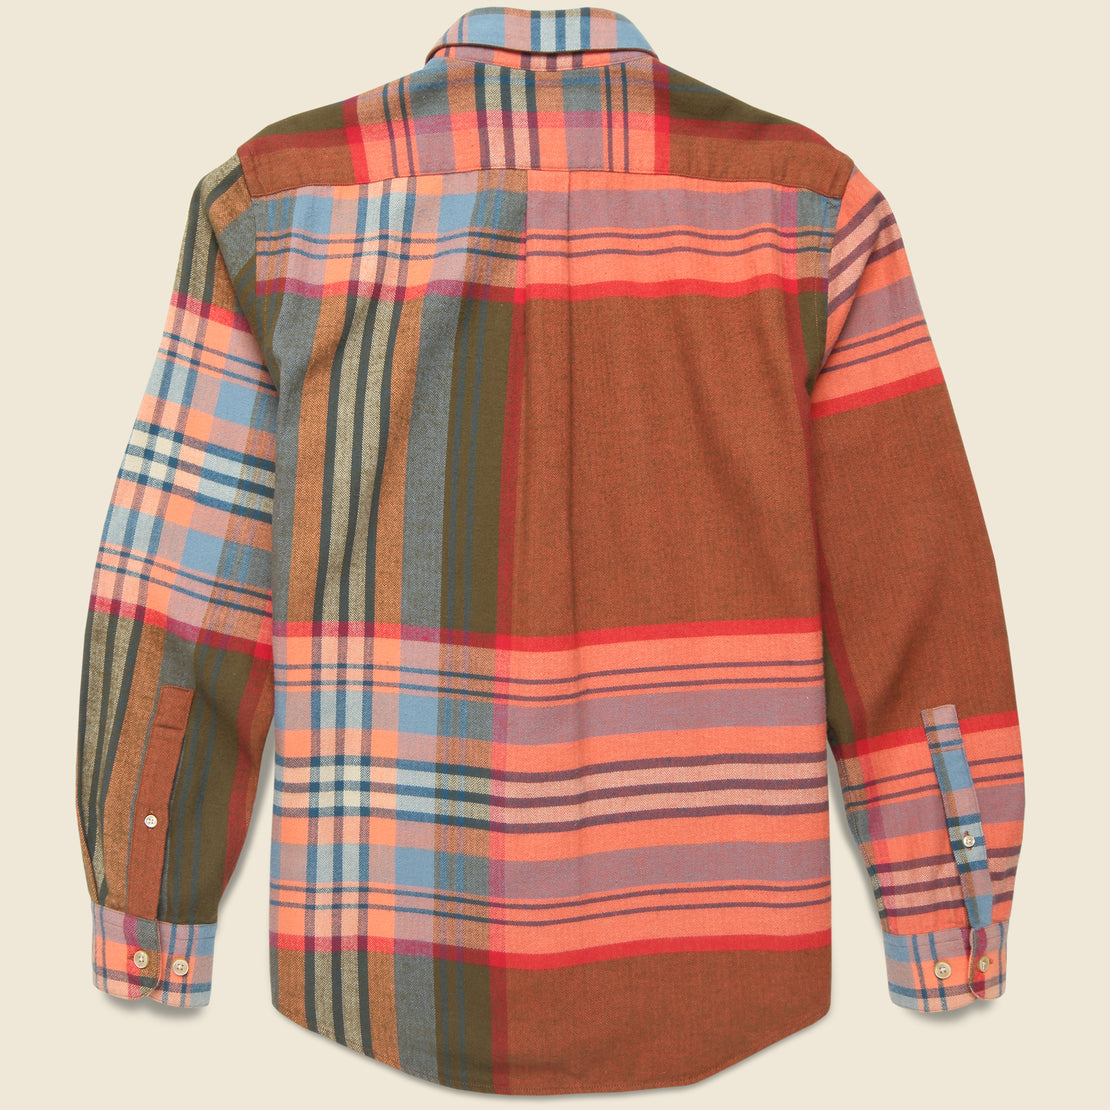 Verso Shirt - Pink/Brick/Multi - Portuguese Flannel - STAG Provisions - Tops - L/S Woven - Plaid